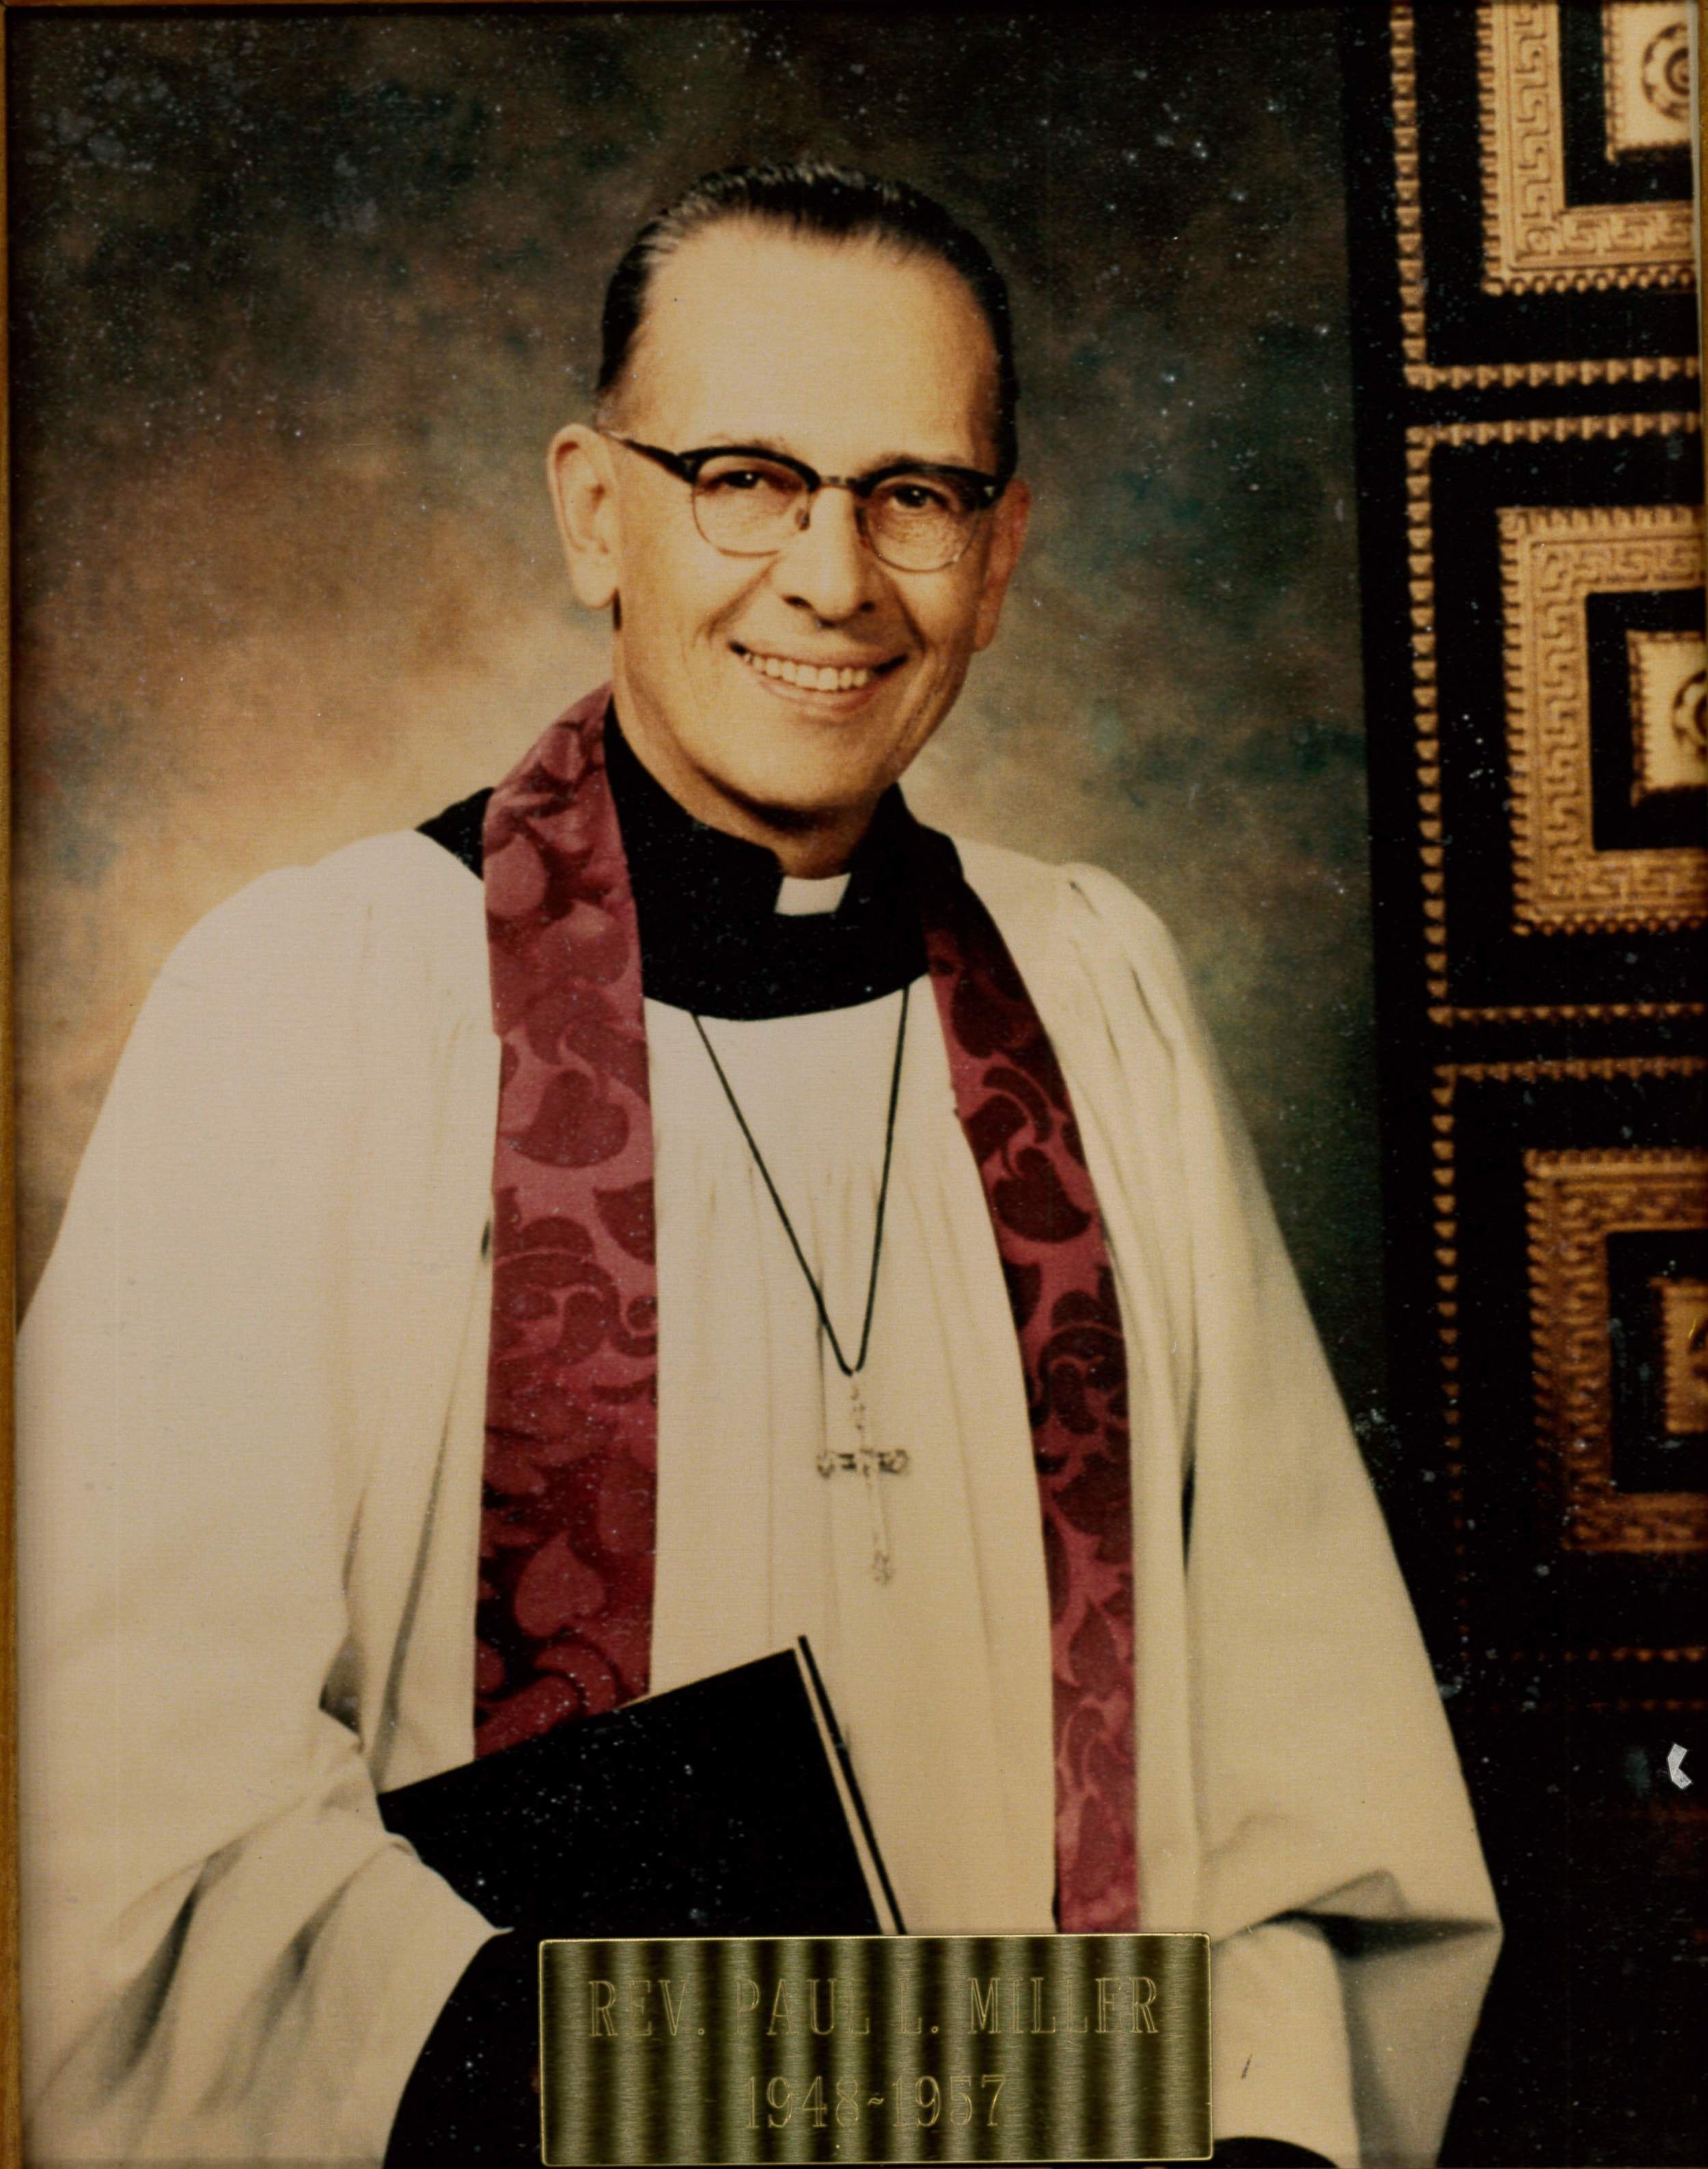 Rev. Paul L. Miller